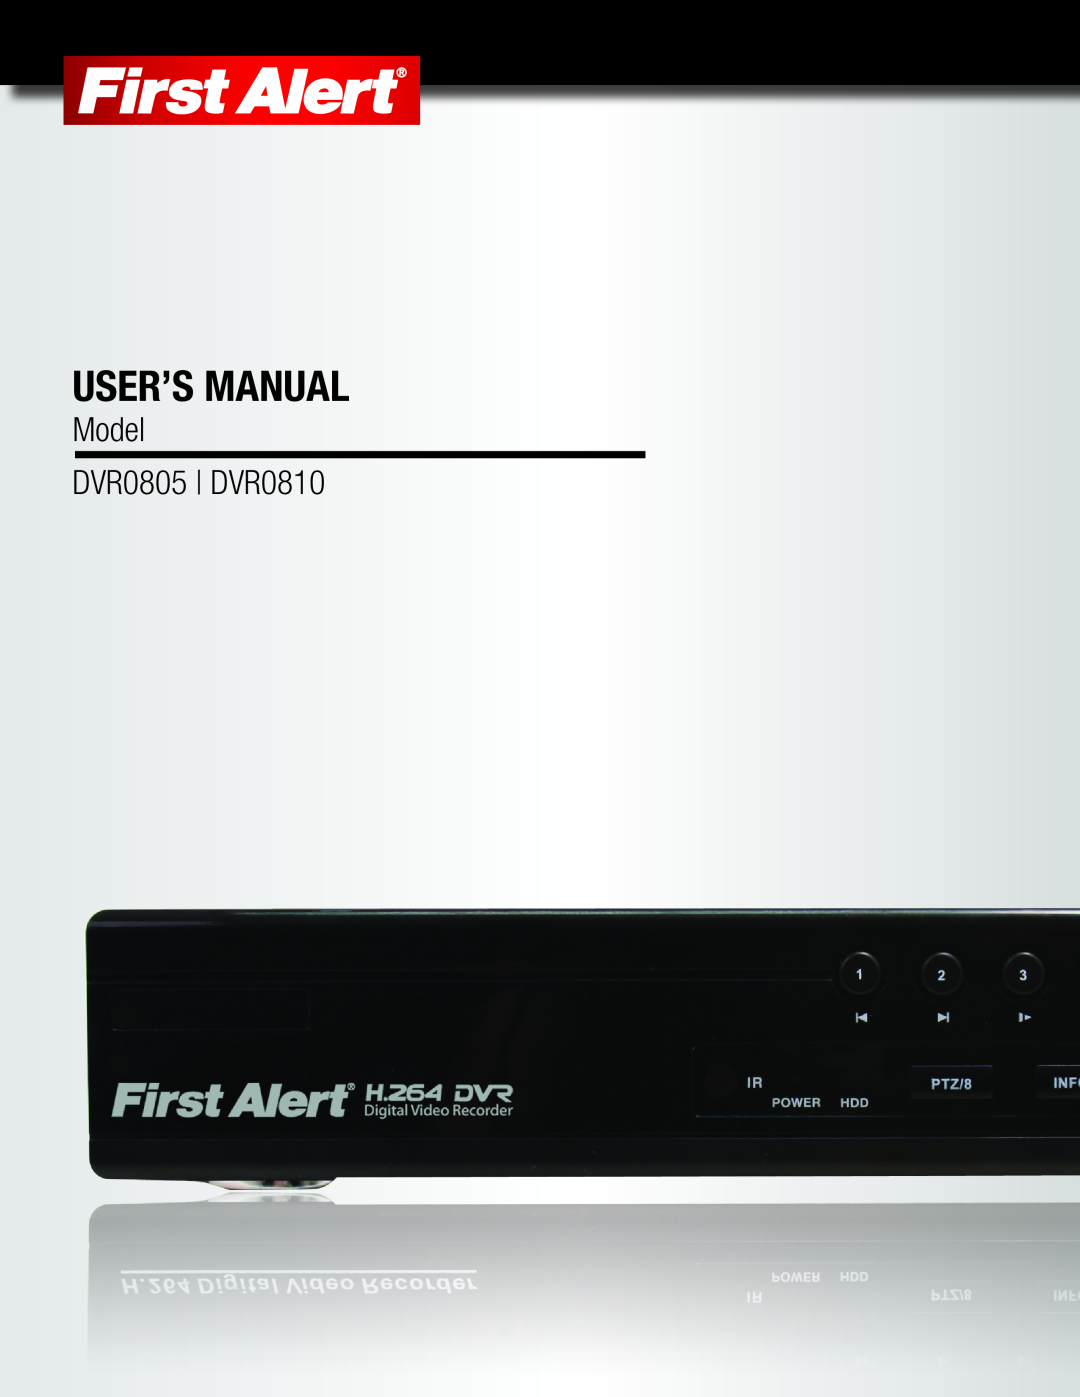 First Alert user manual User’S Manual, Model DVR0805 DVR0810 